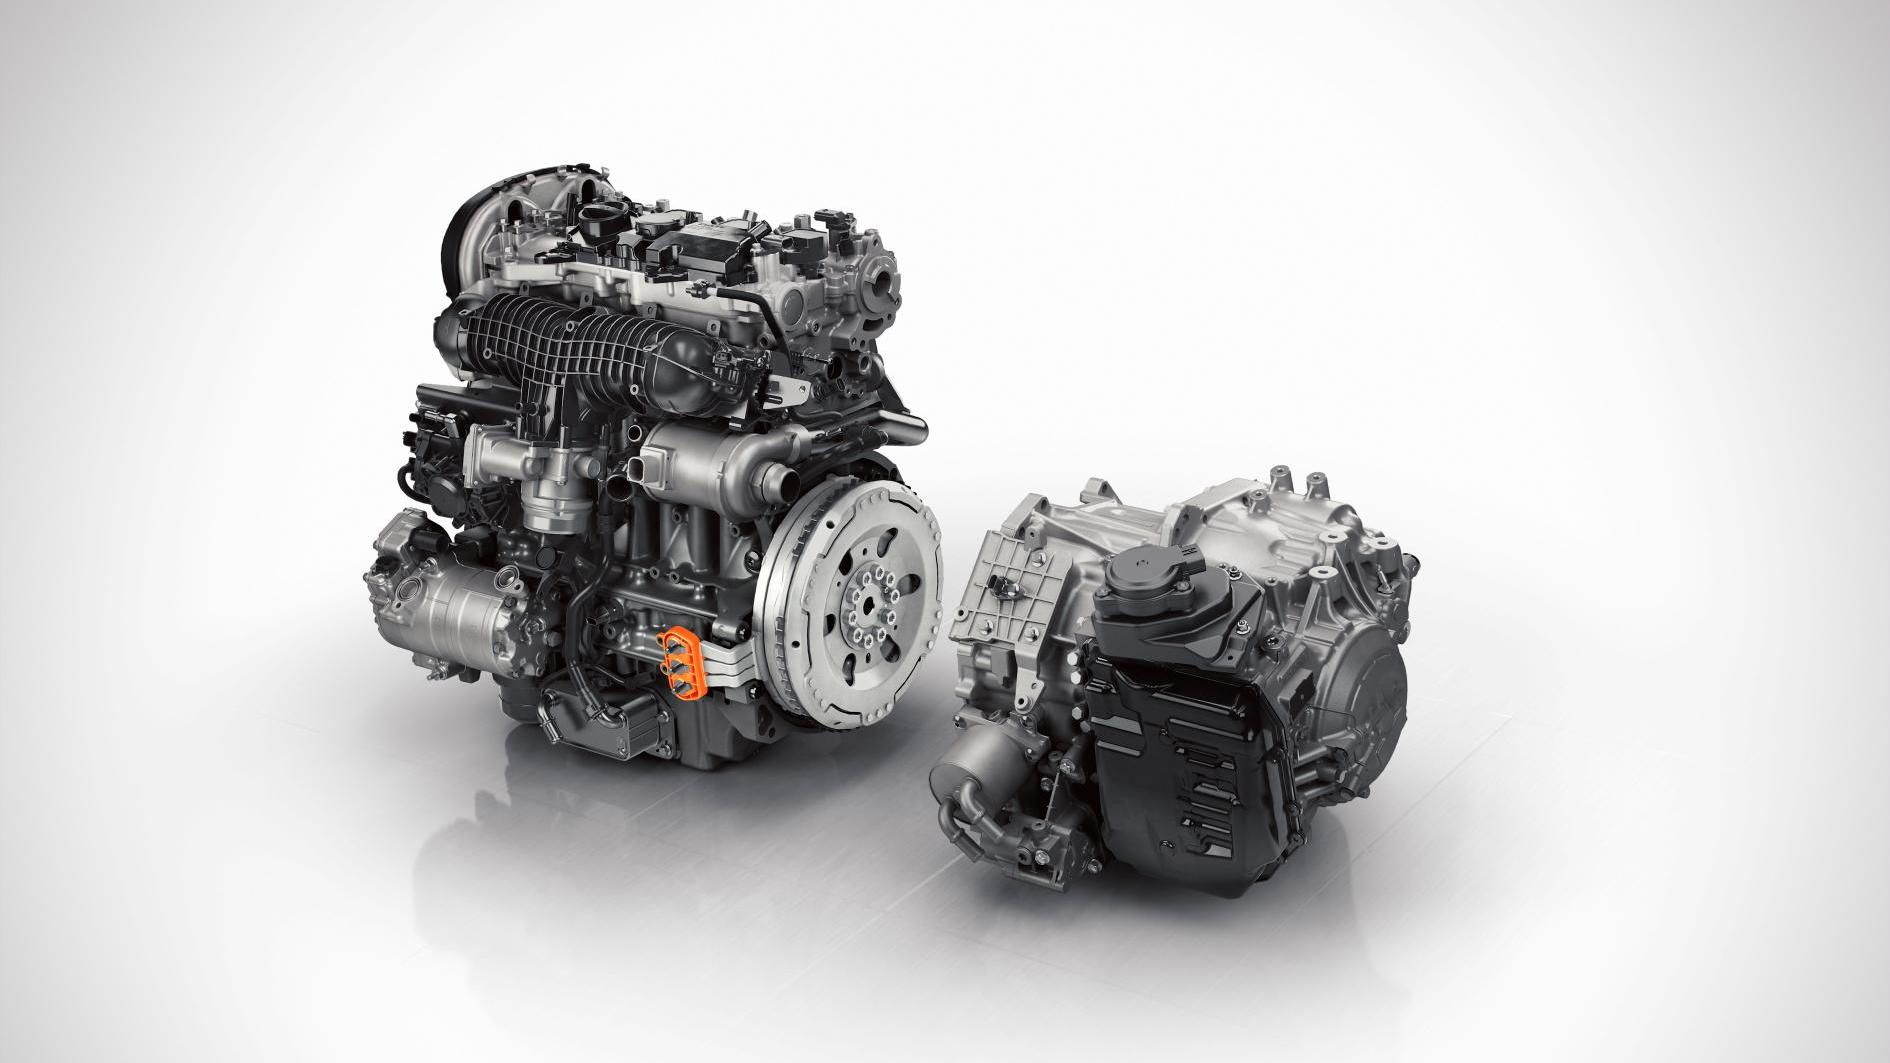 Volvo Twin Engine technology